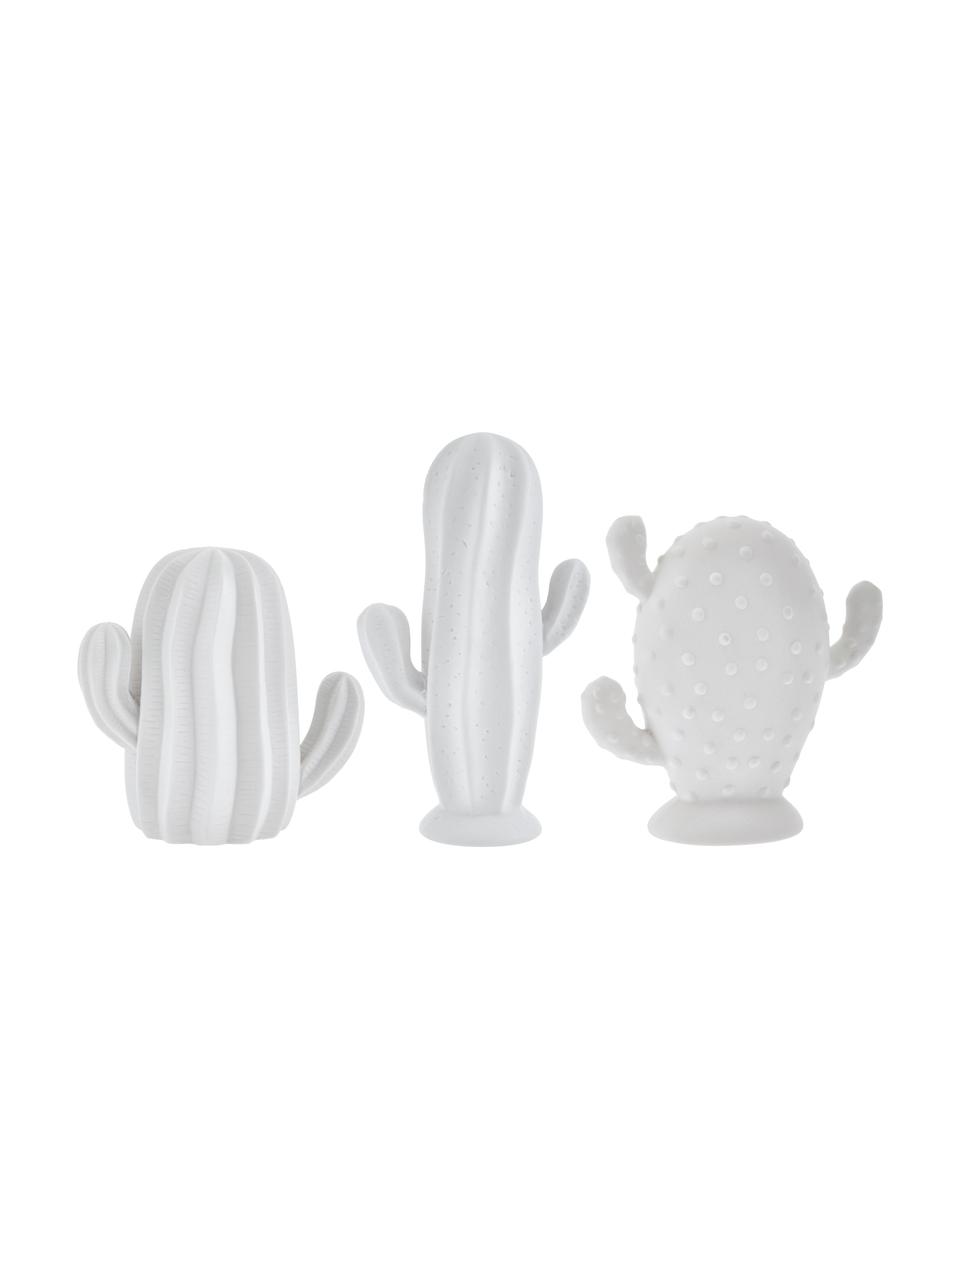 Set de cactus decorativos Dina, 3 pzas., Porcelana, sin tratar, mate, Blanco, Set de diferentes tamaños